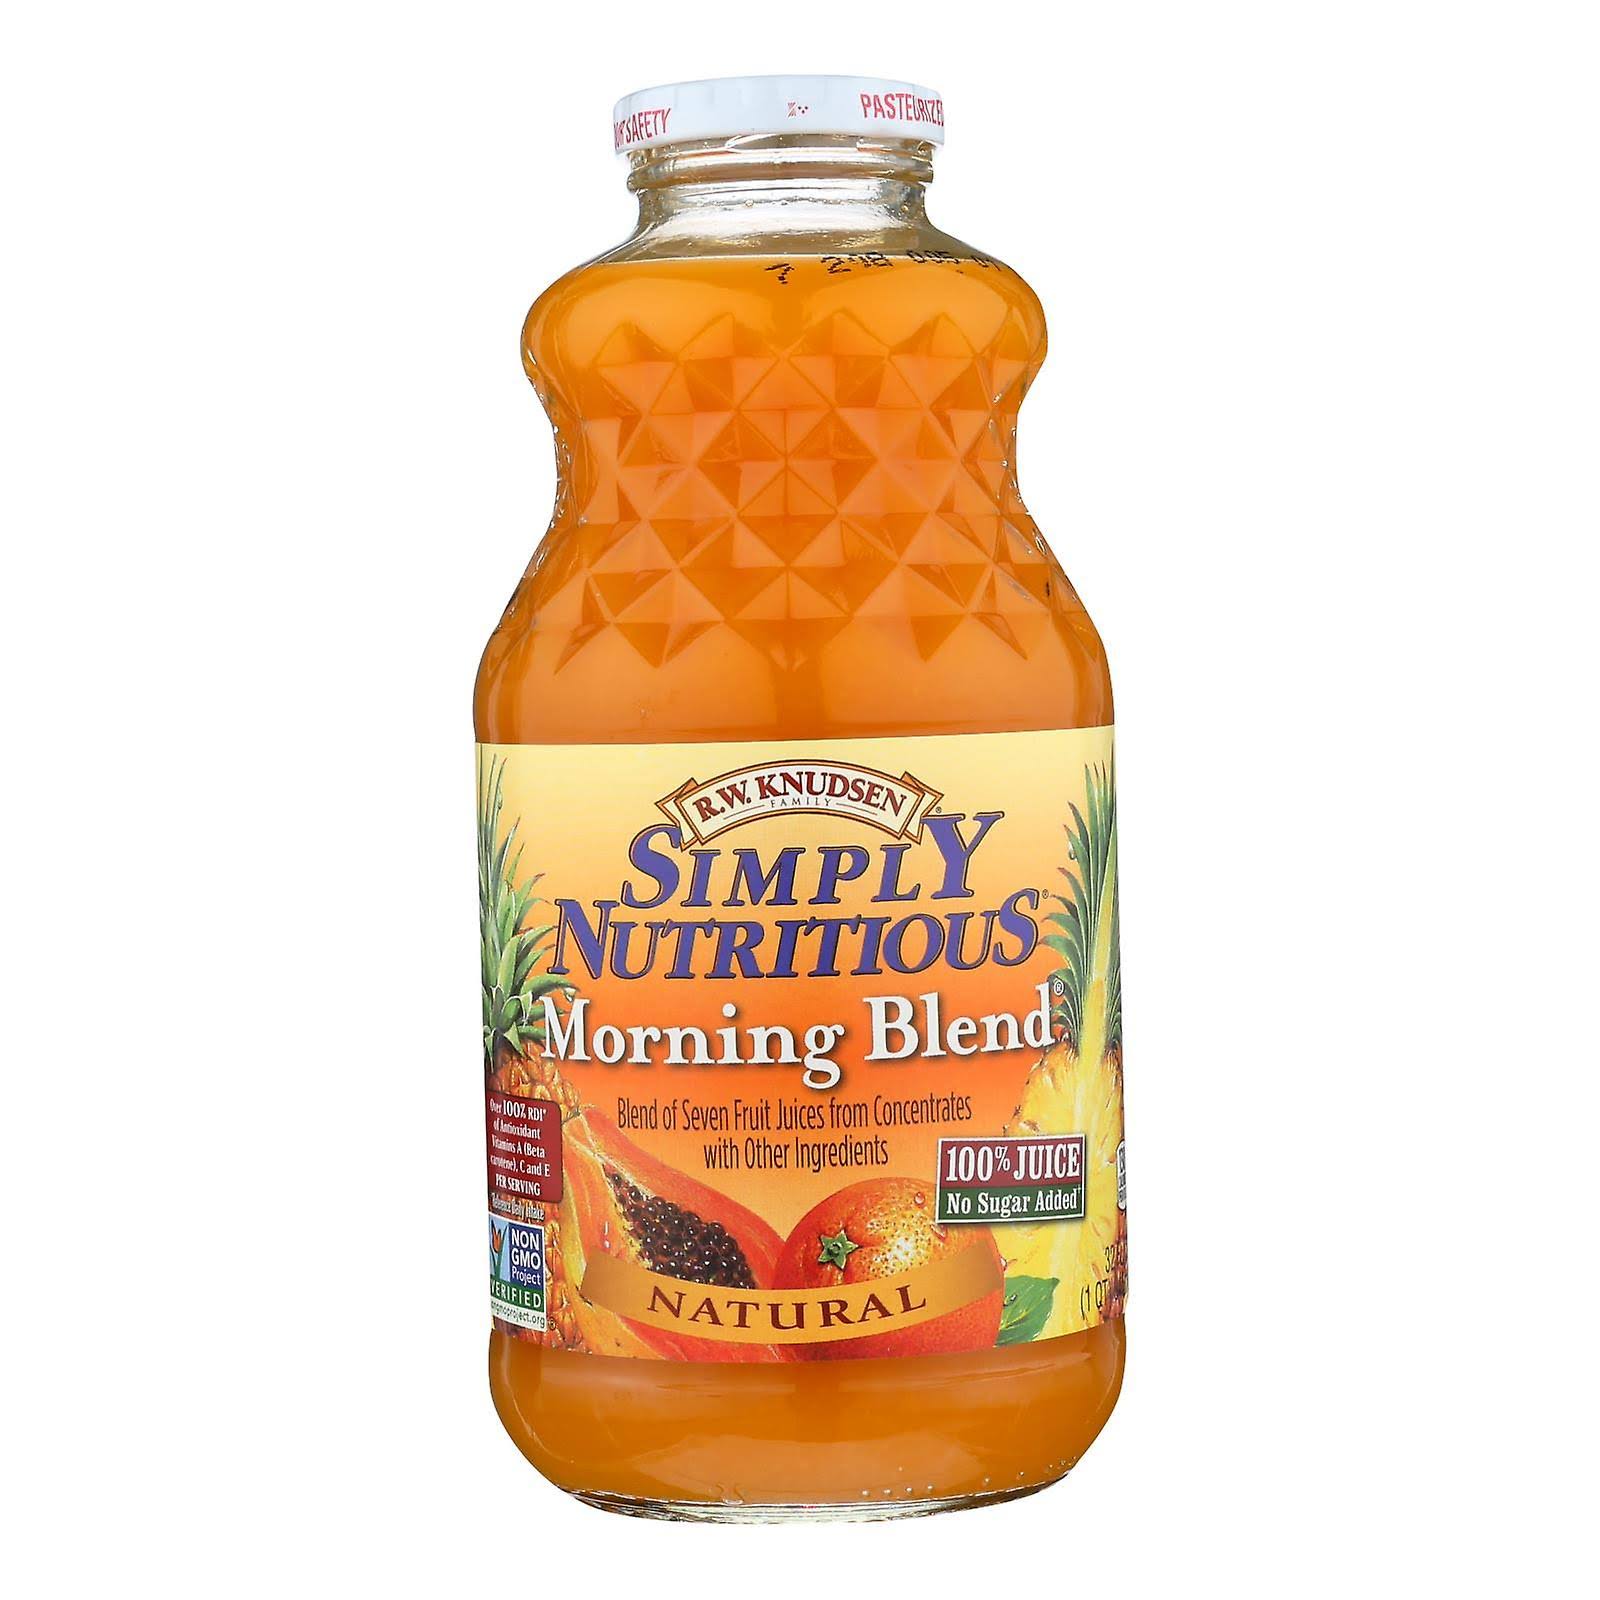 R.W. Knudsen Simply Nutritious Morning Blend Fruit Juice - 32 fl oz